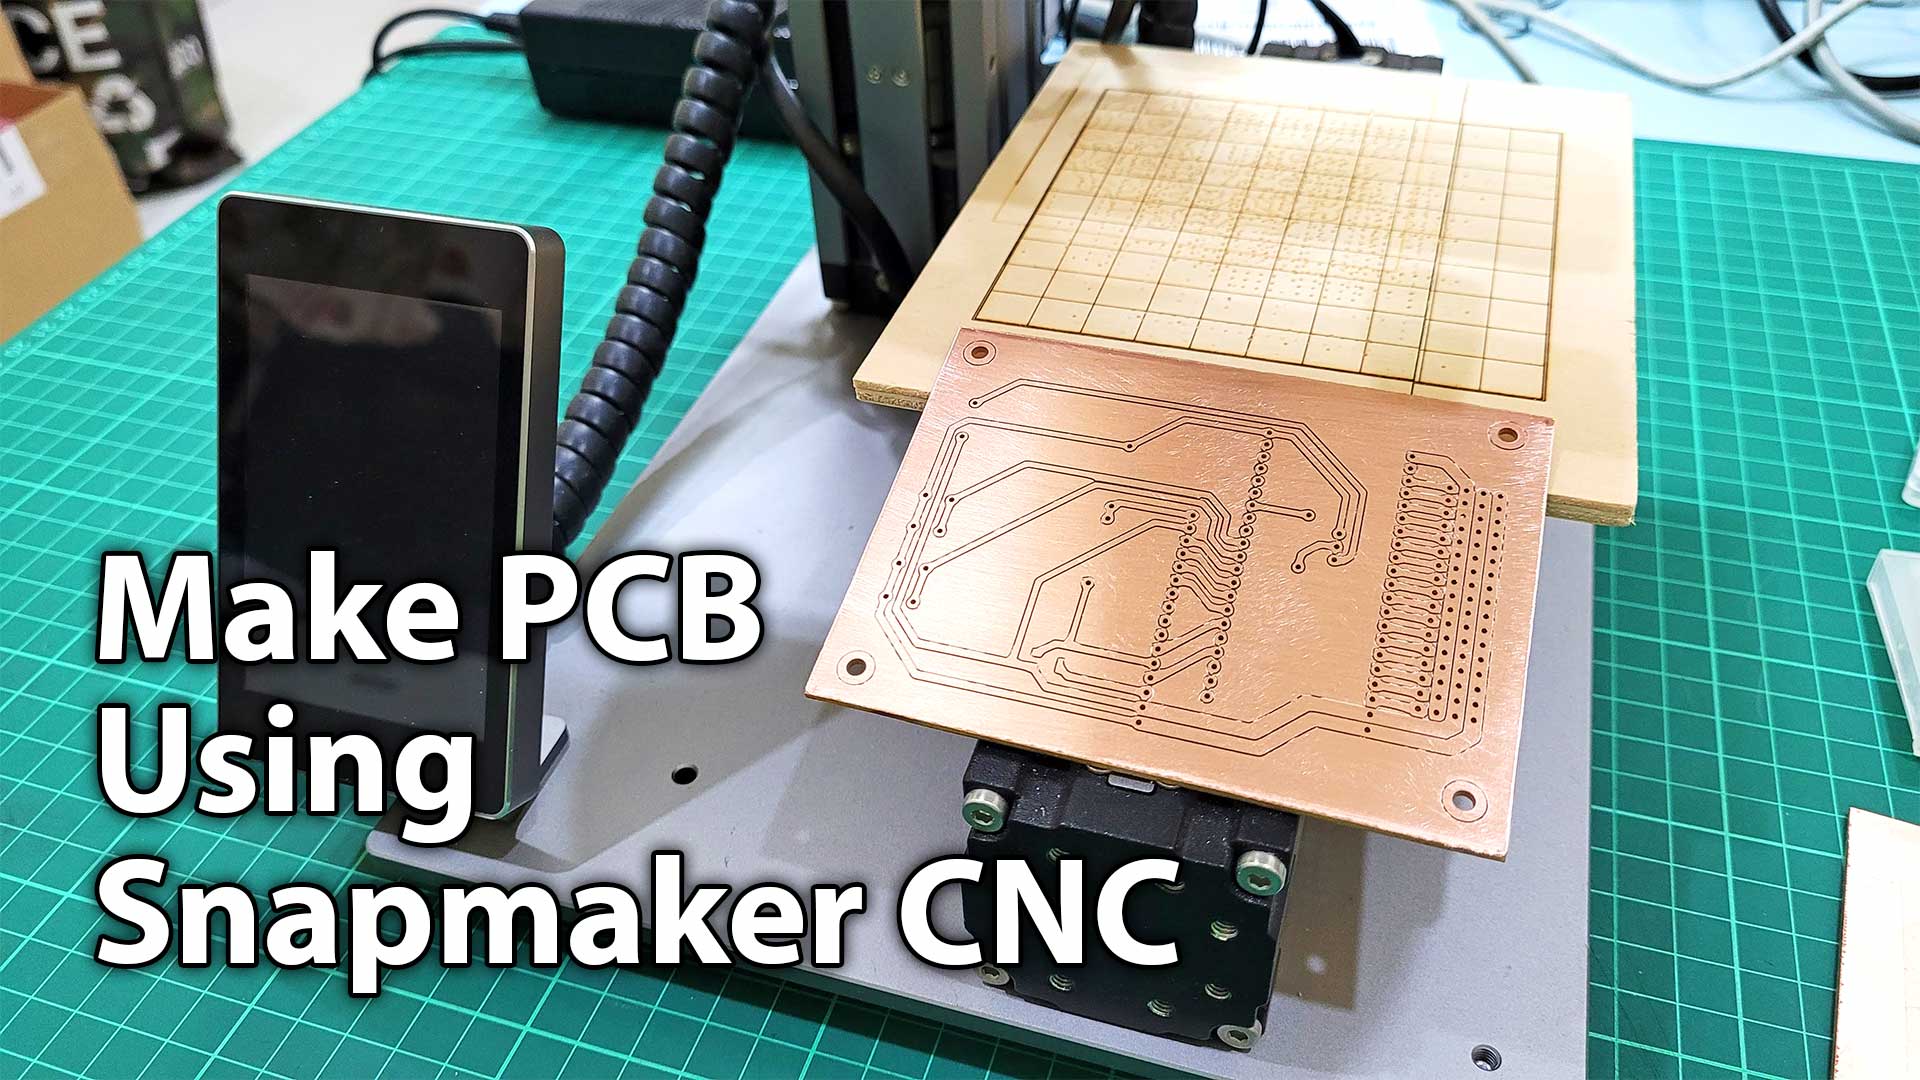 Make PCB Using Snapmaker CNC